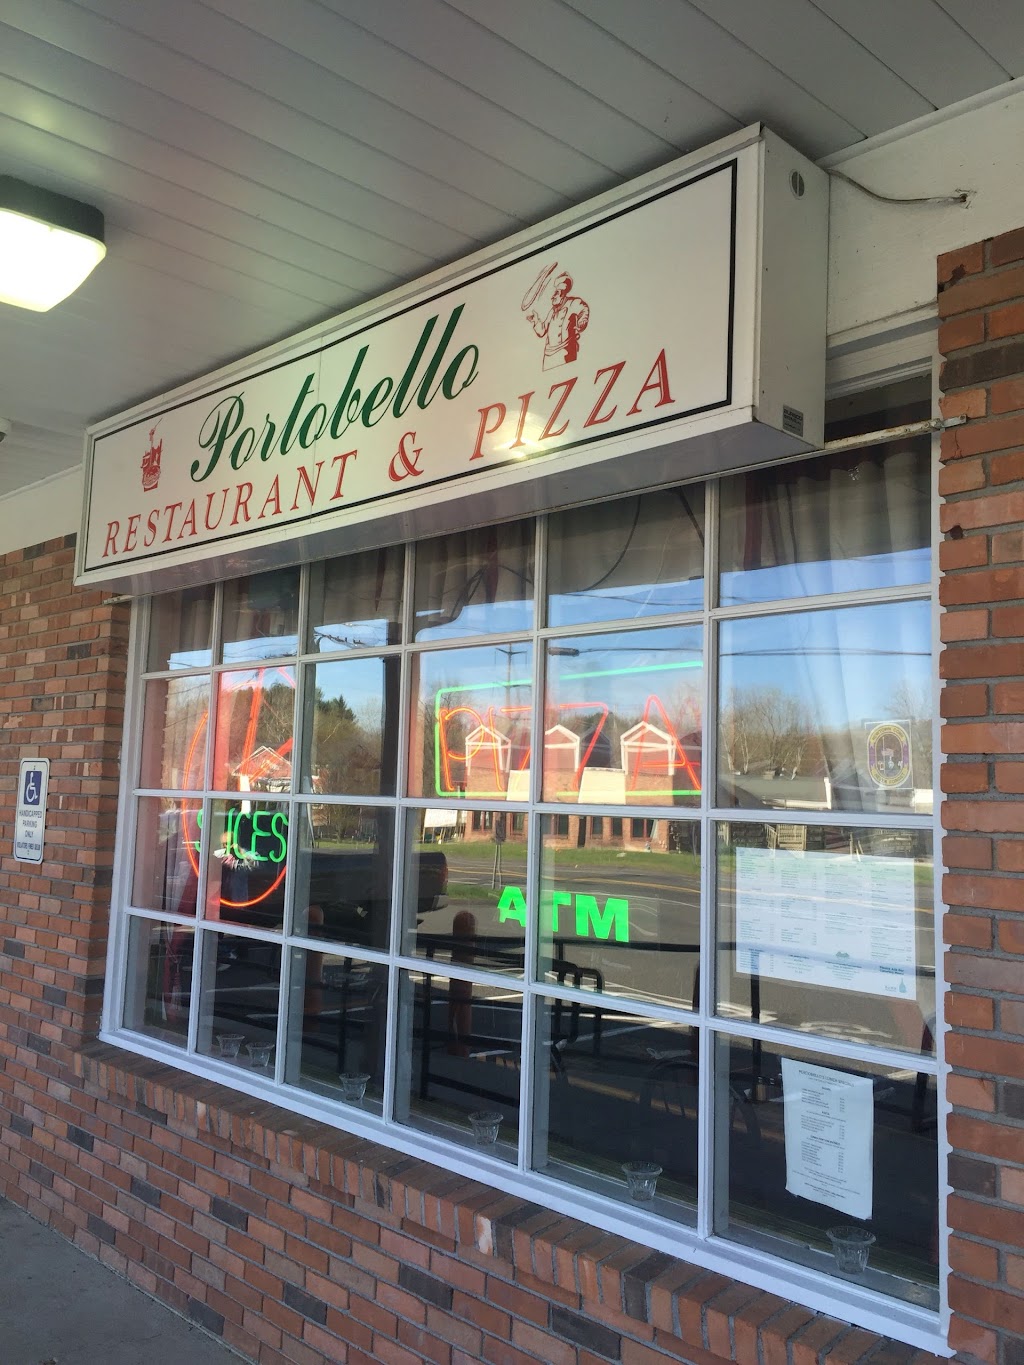 Portobello Restaurant & Pizza | 756 Federal Rd, Brookfield, CT 06804 | Phone: (203) 775-4400